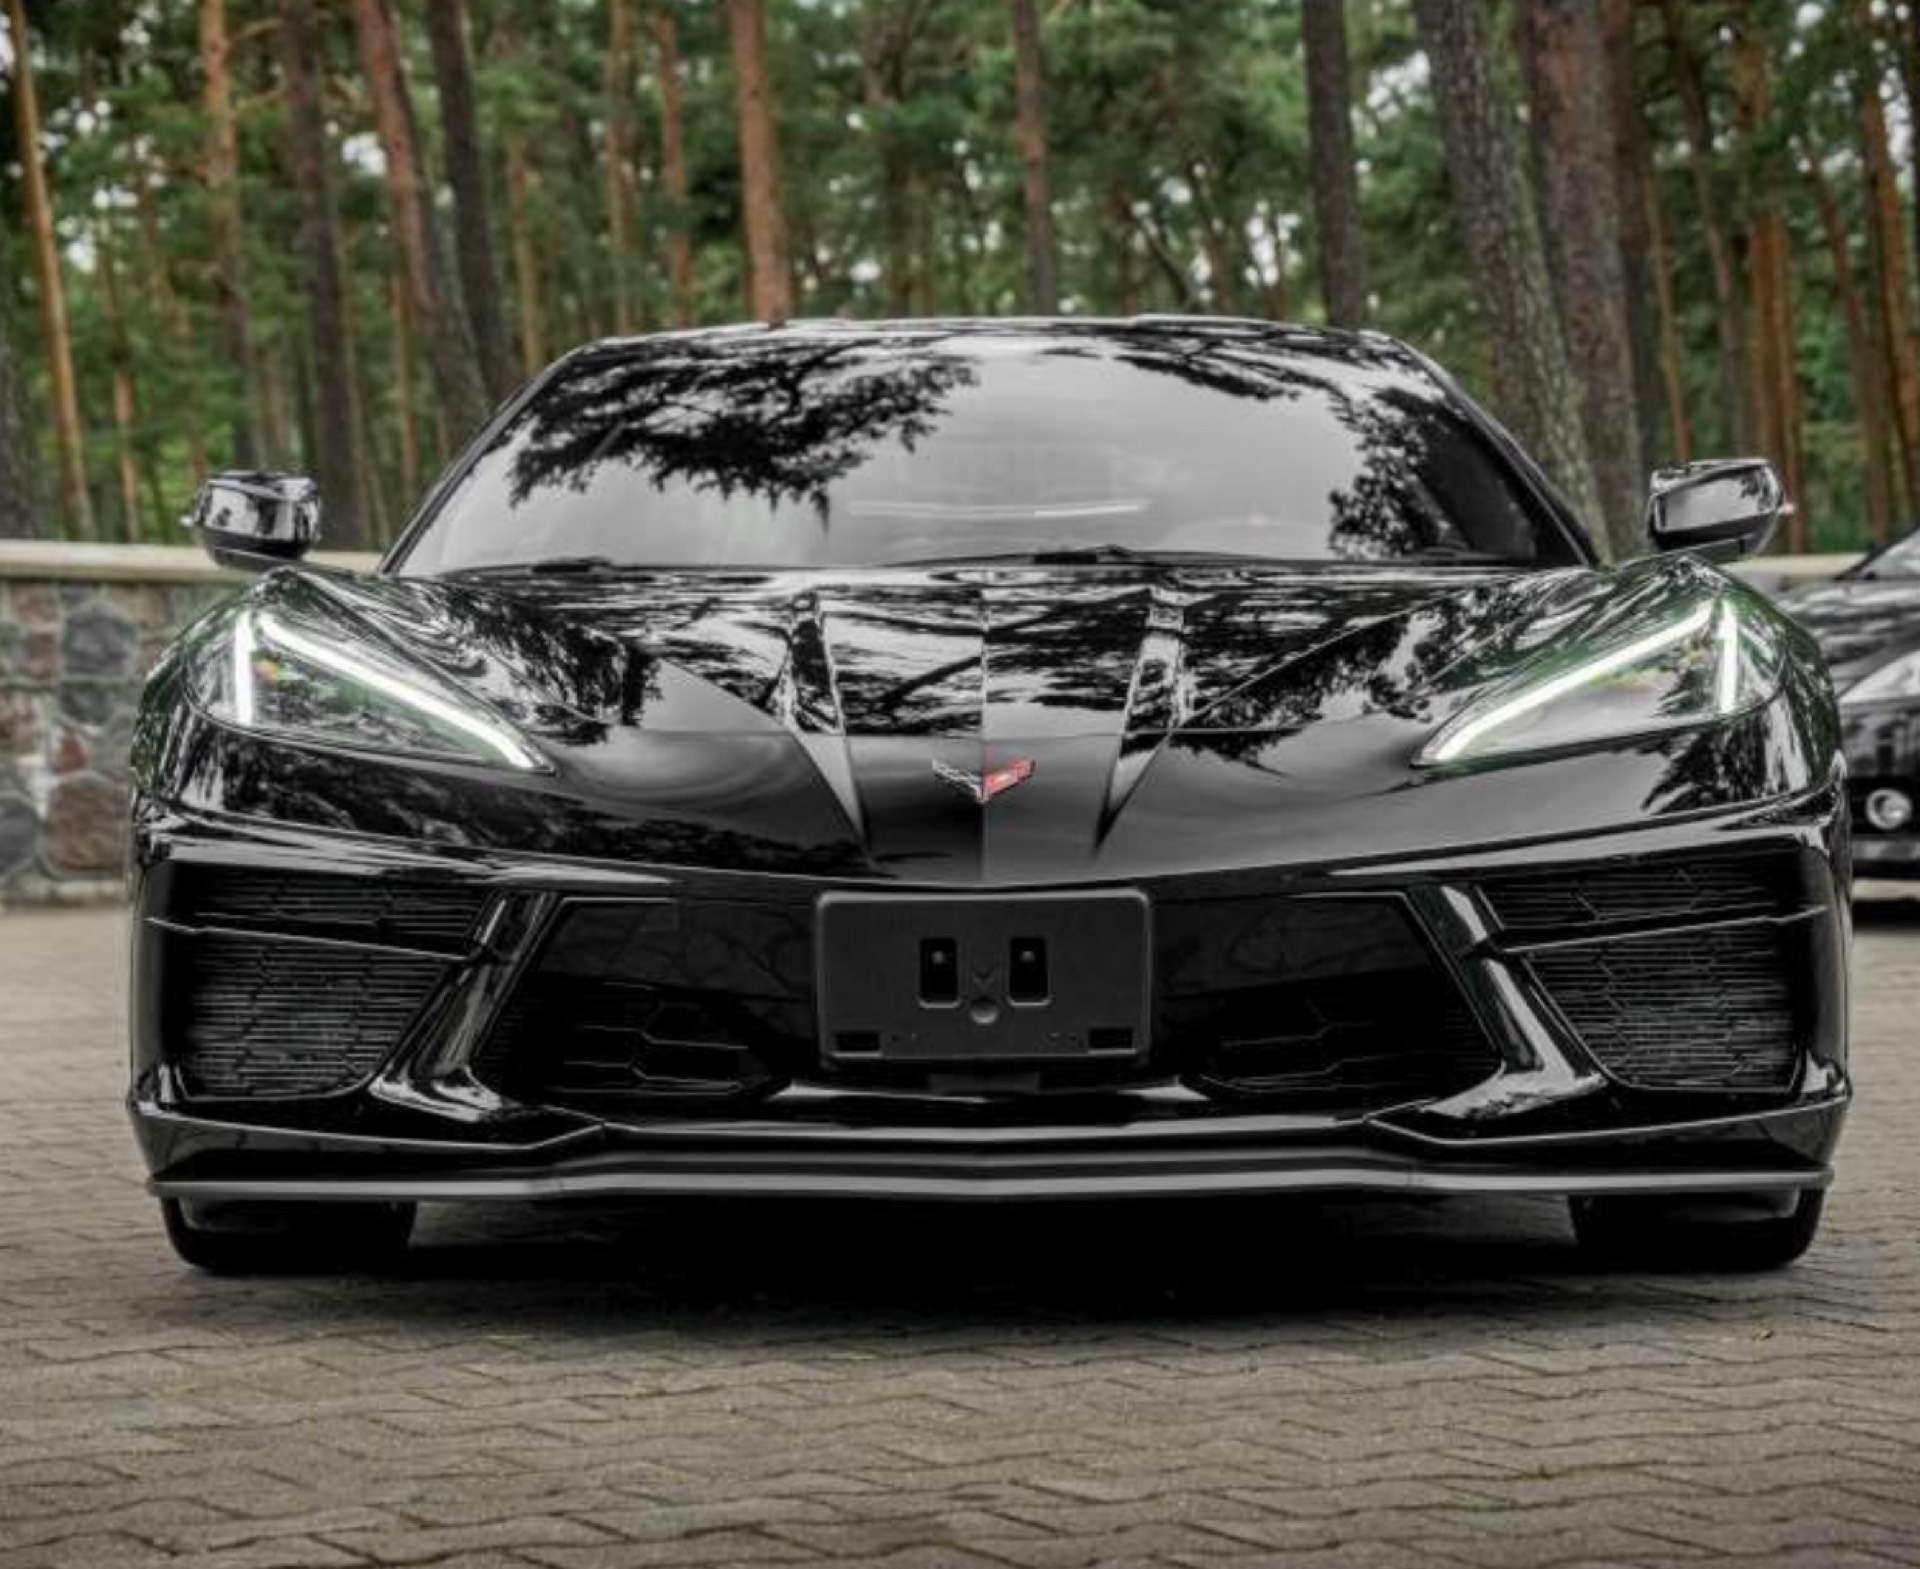 Corvette C8 Coupe in Black used in Ceriale - SV for € 95,000.-